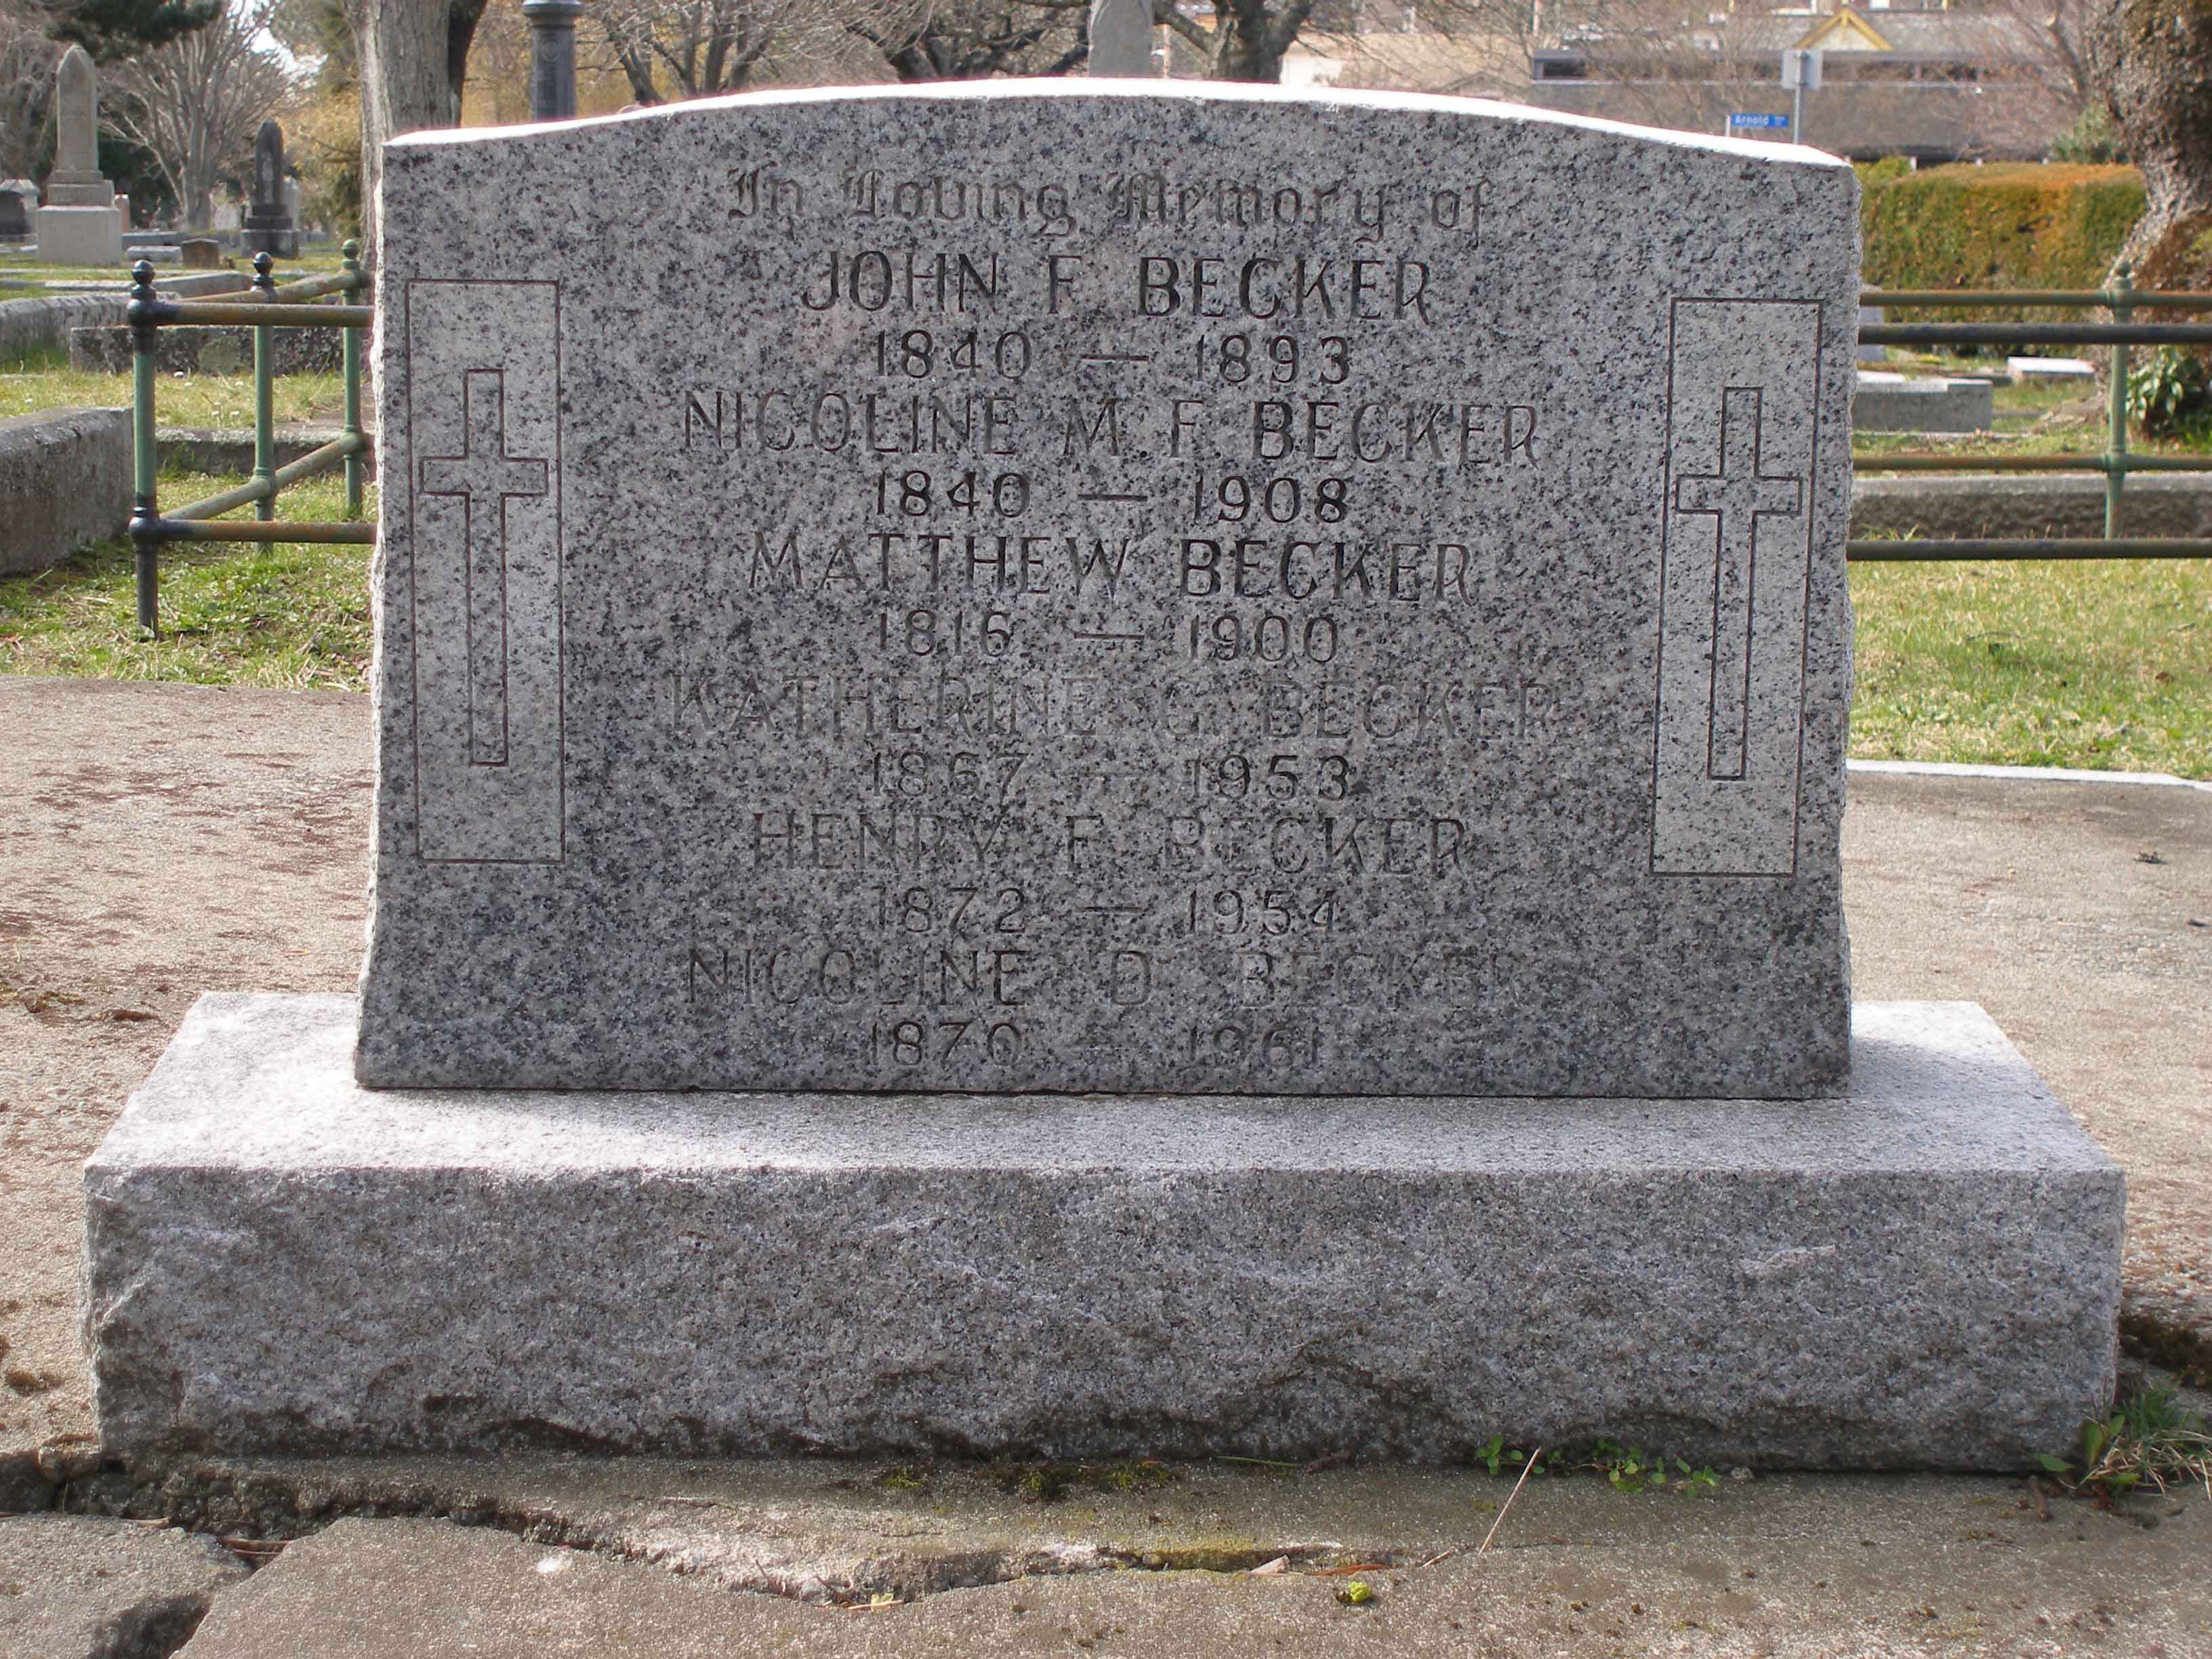 John Frederick Becker tomb inscription